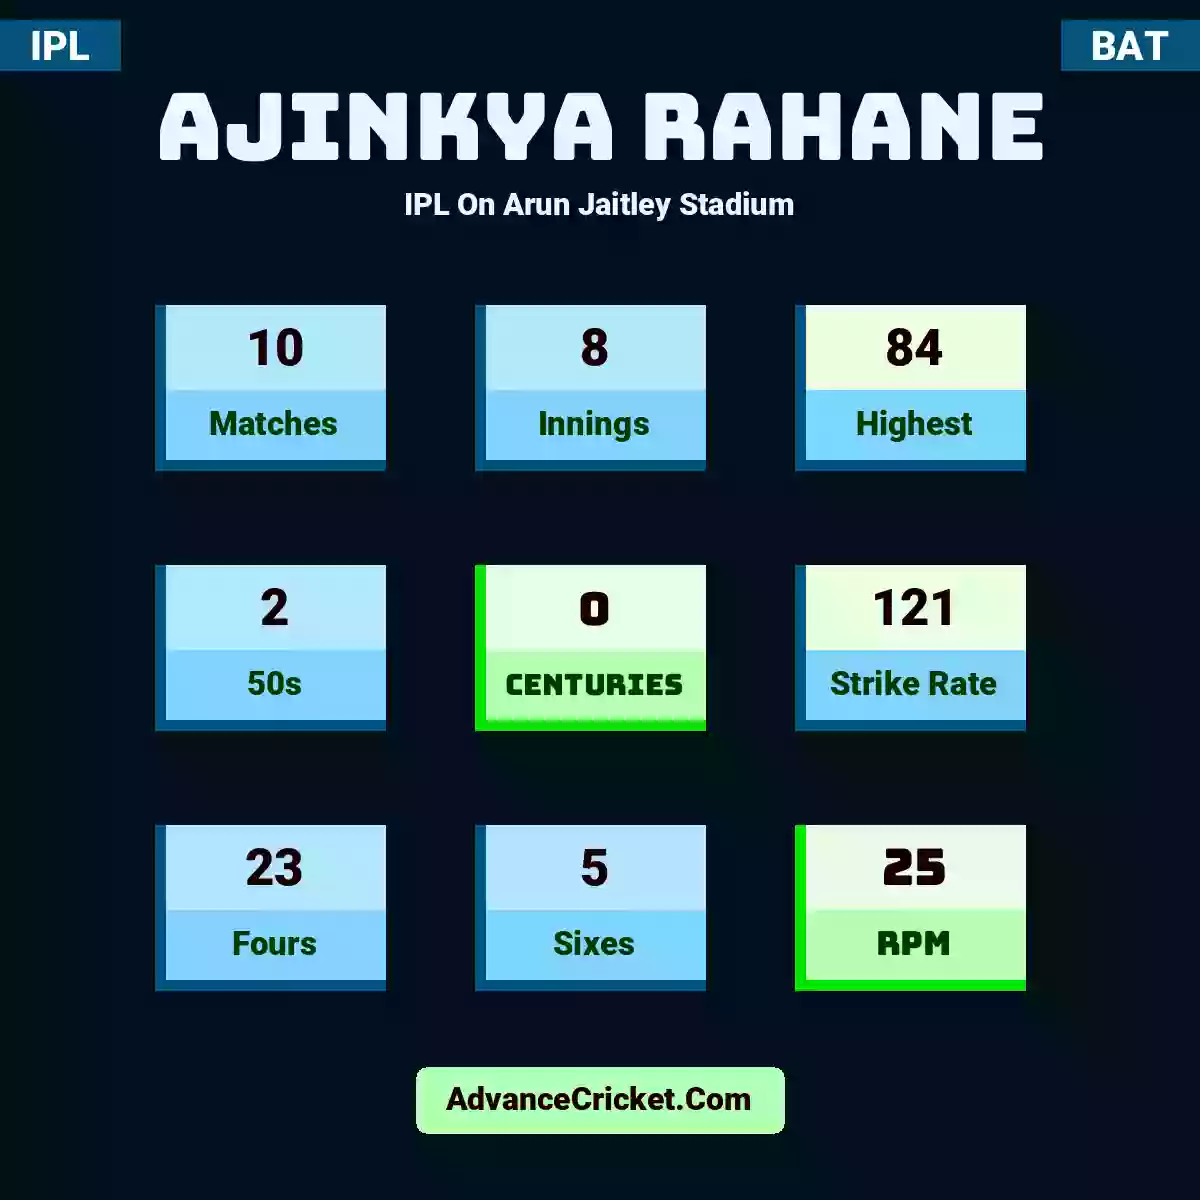 Ajinkya Rahane IPL  On Arun Jaitley Stadium, Ajinkya Rahane played 10 matches, scored 84 runs as highest, 2 half-centuries, and 0 centuries, with a strike rate of 121. A.Rahane hit 23 fours and 5 sixes, with an RPM of 25.